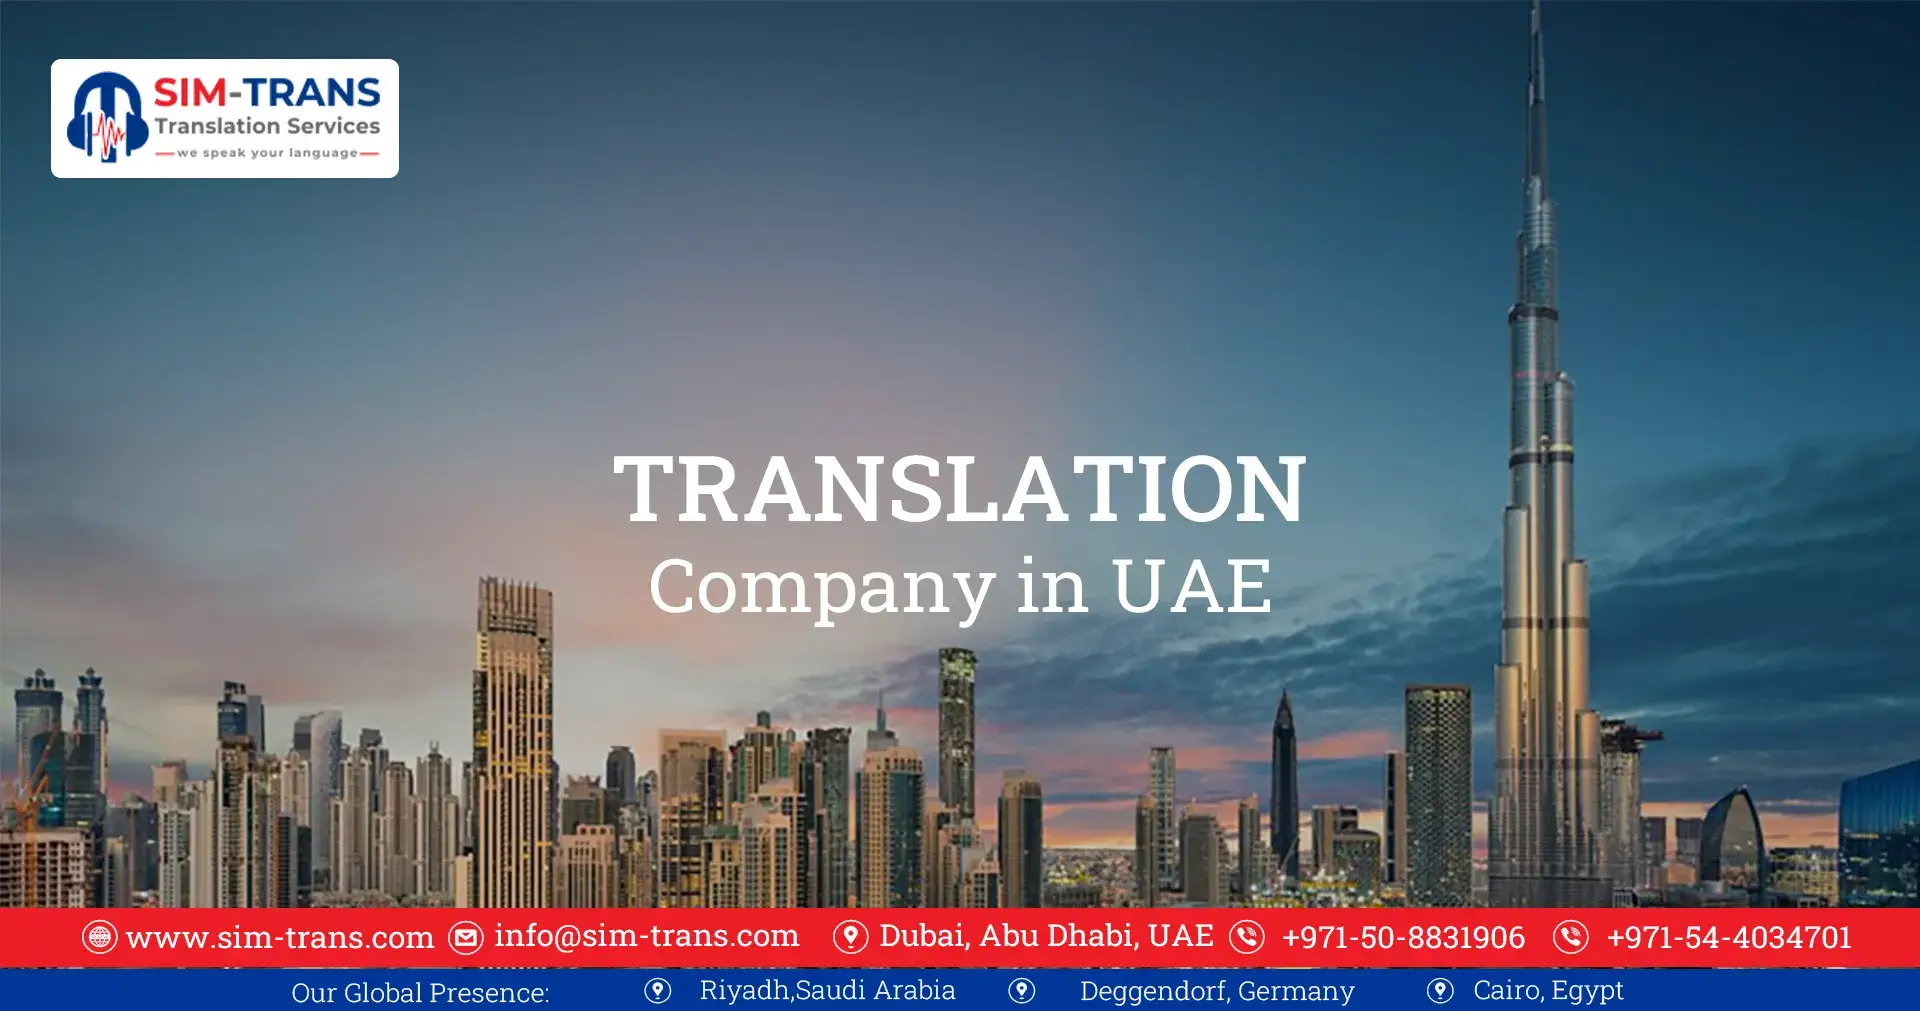 Why is Sim-trans Dubai’s Top Translation Company?